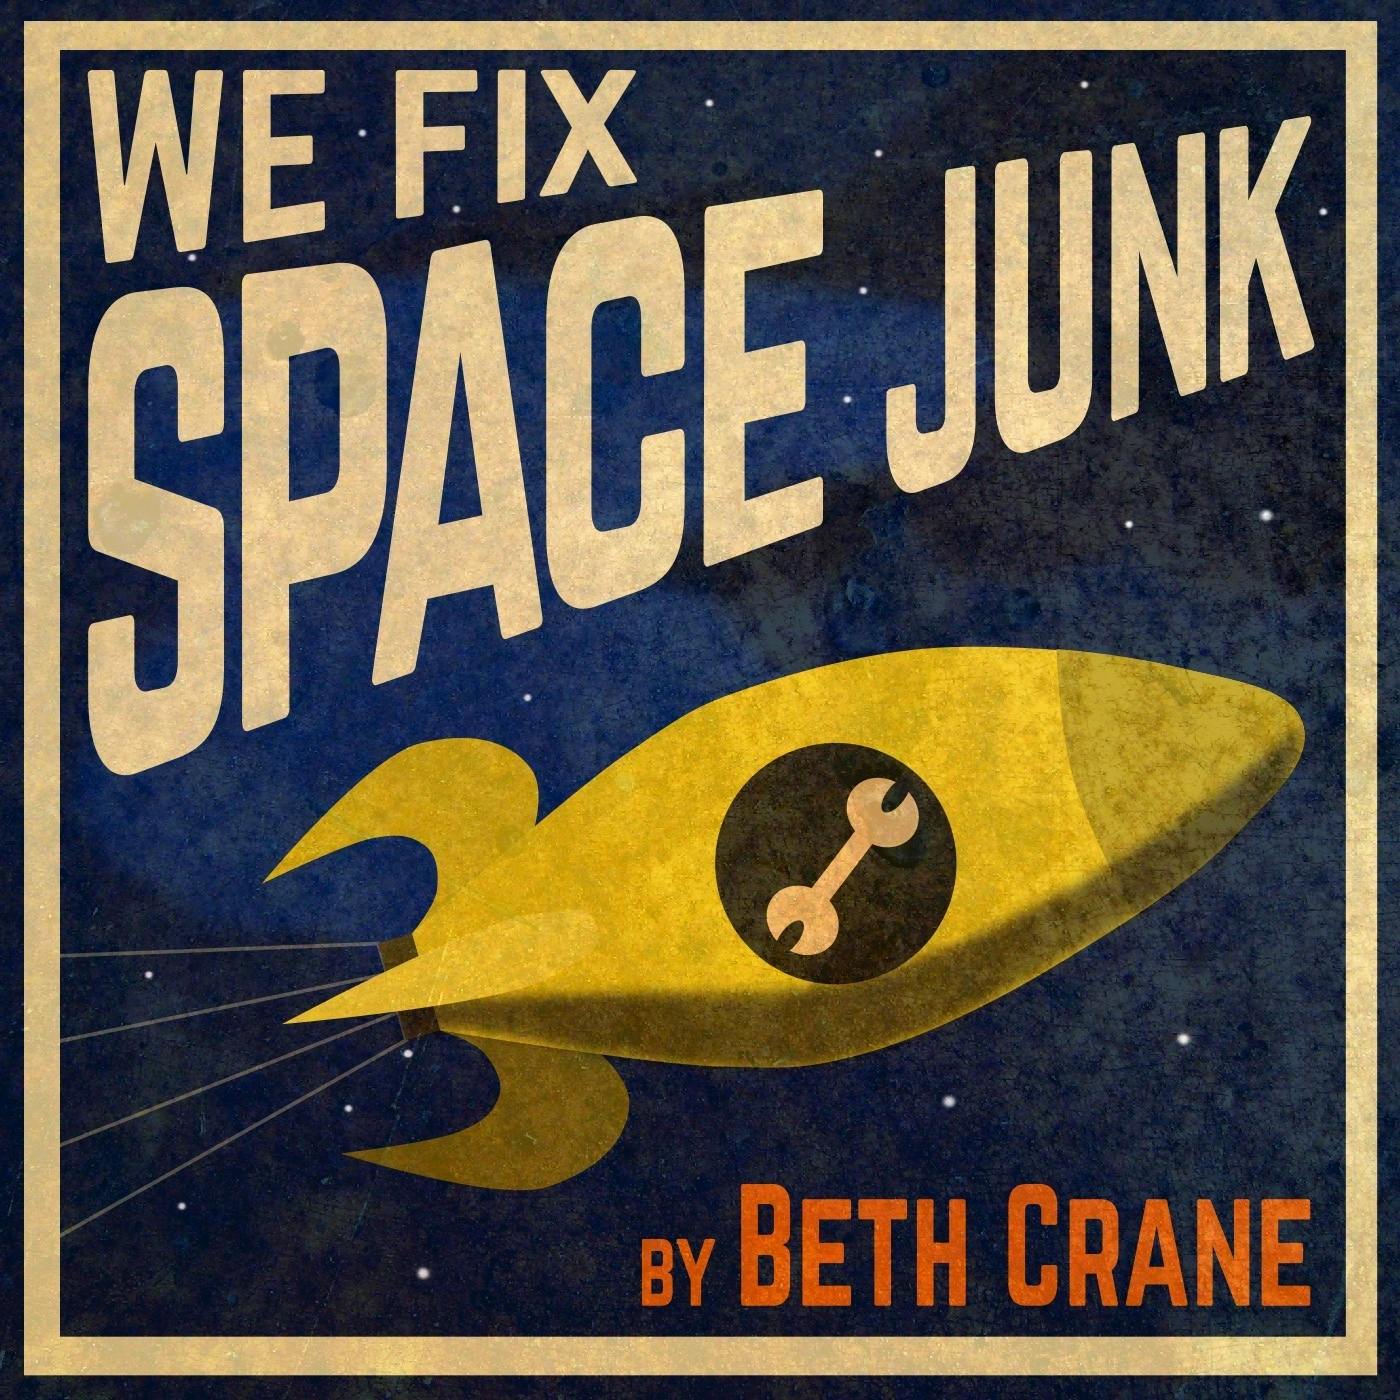 Presenting: We Fix Space Junk